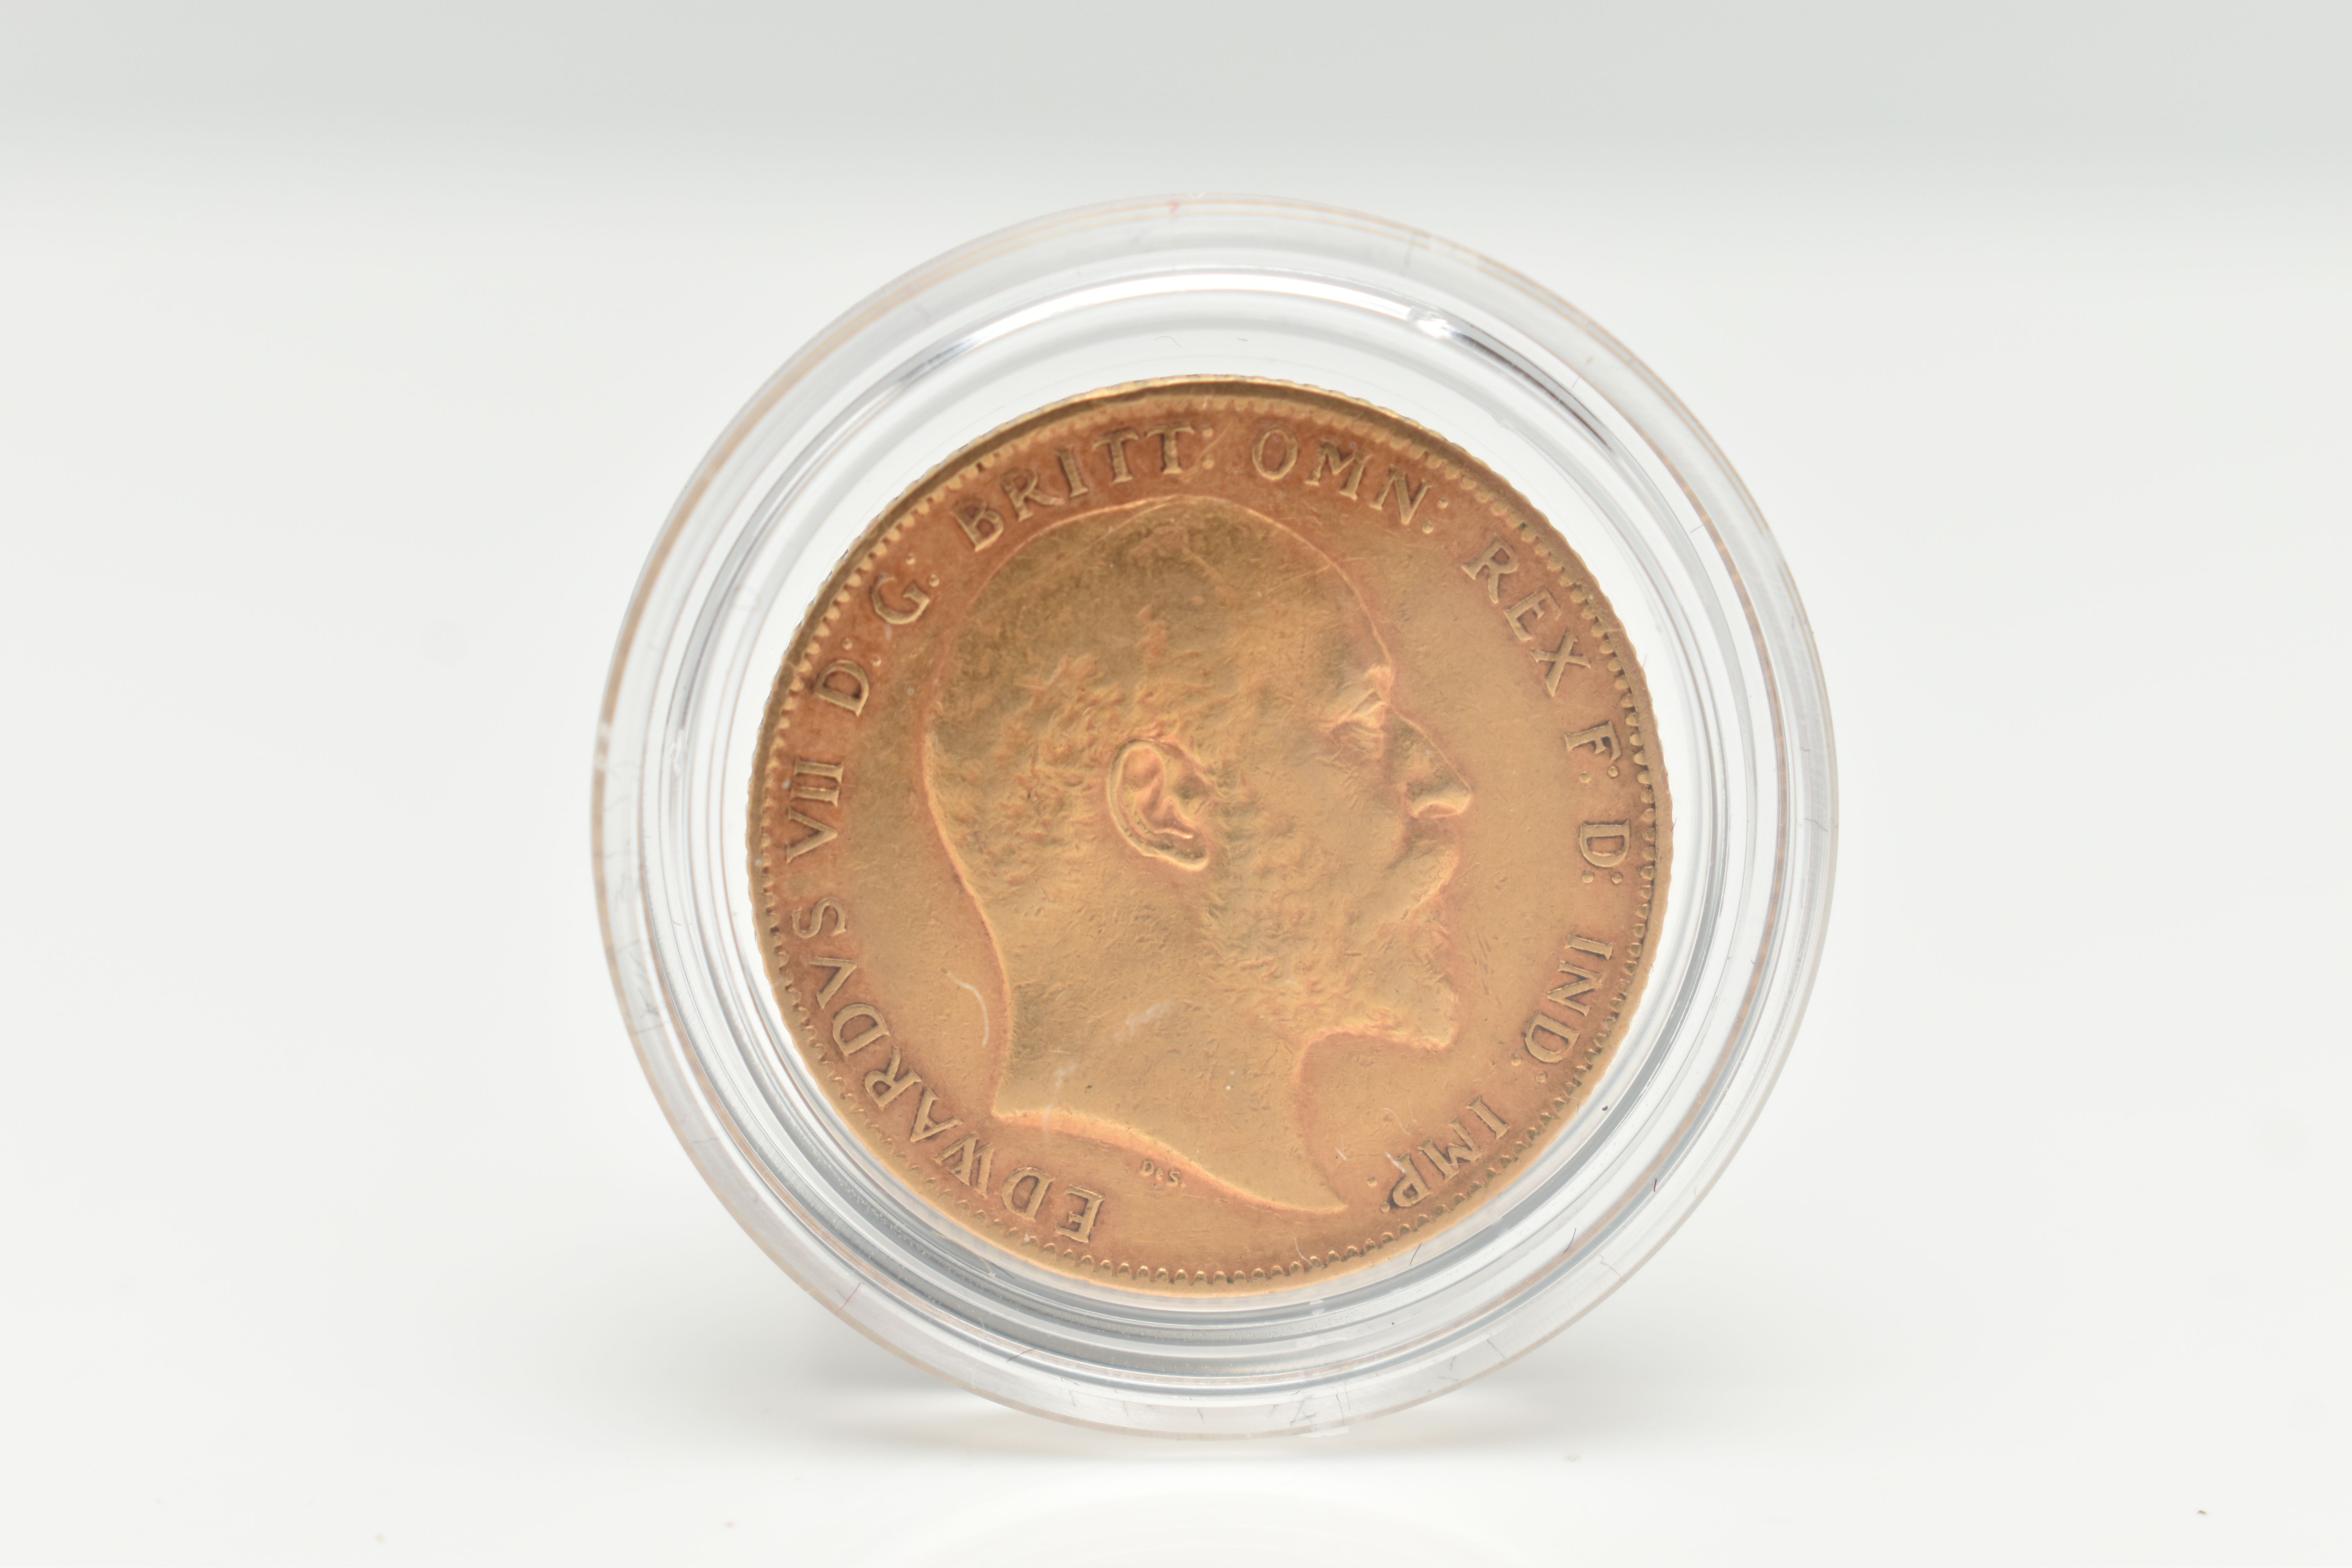 A FULL GOLD SOVEREIGN 1903 DEPICTING EDWARD VII, 22ct, 7.98 gram, 22.05mm diameter - Image 2 of 2